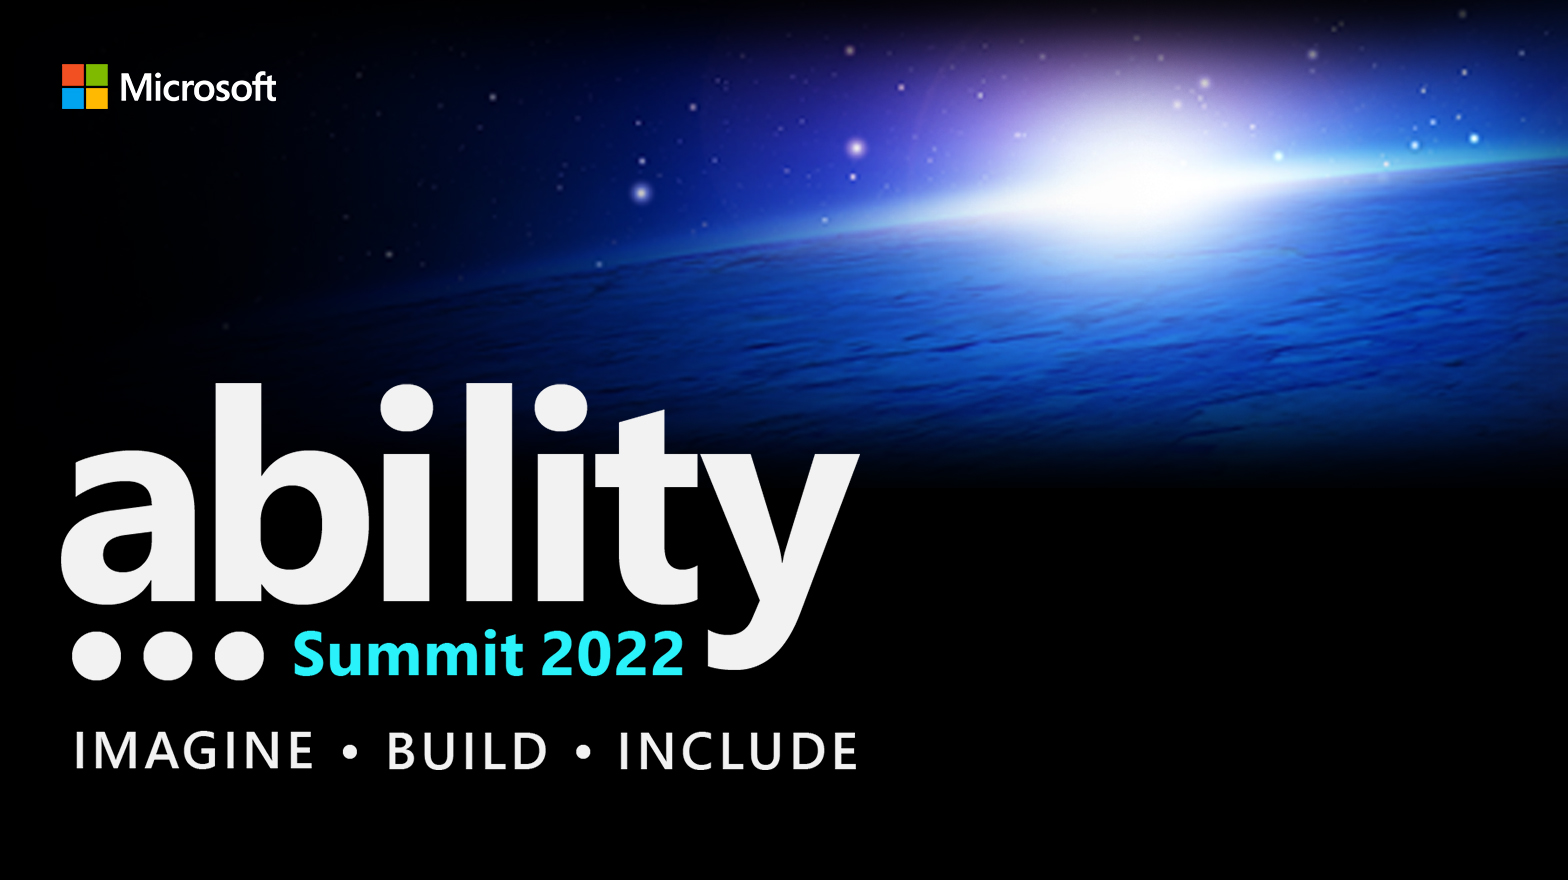 Ability Summit 2022. Imagine, Build, Include